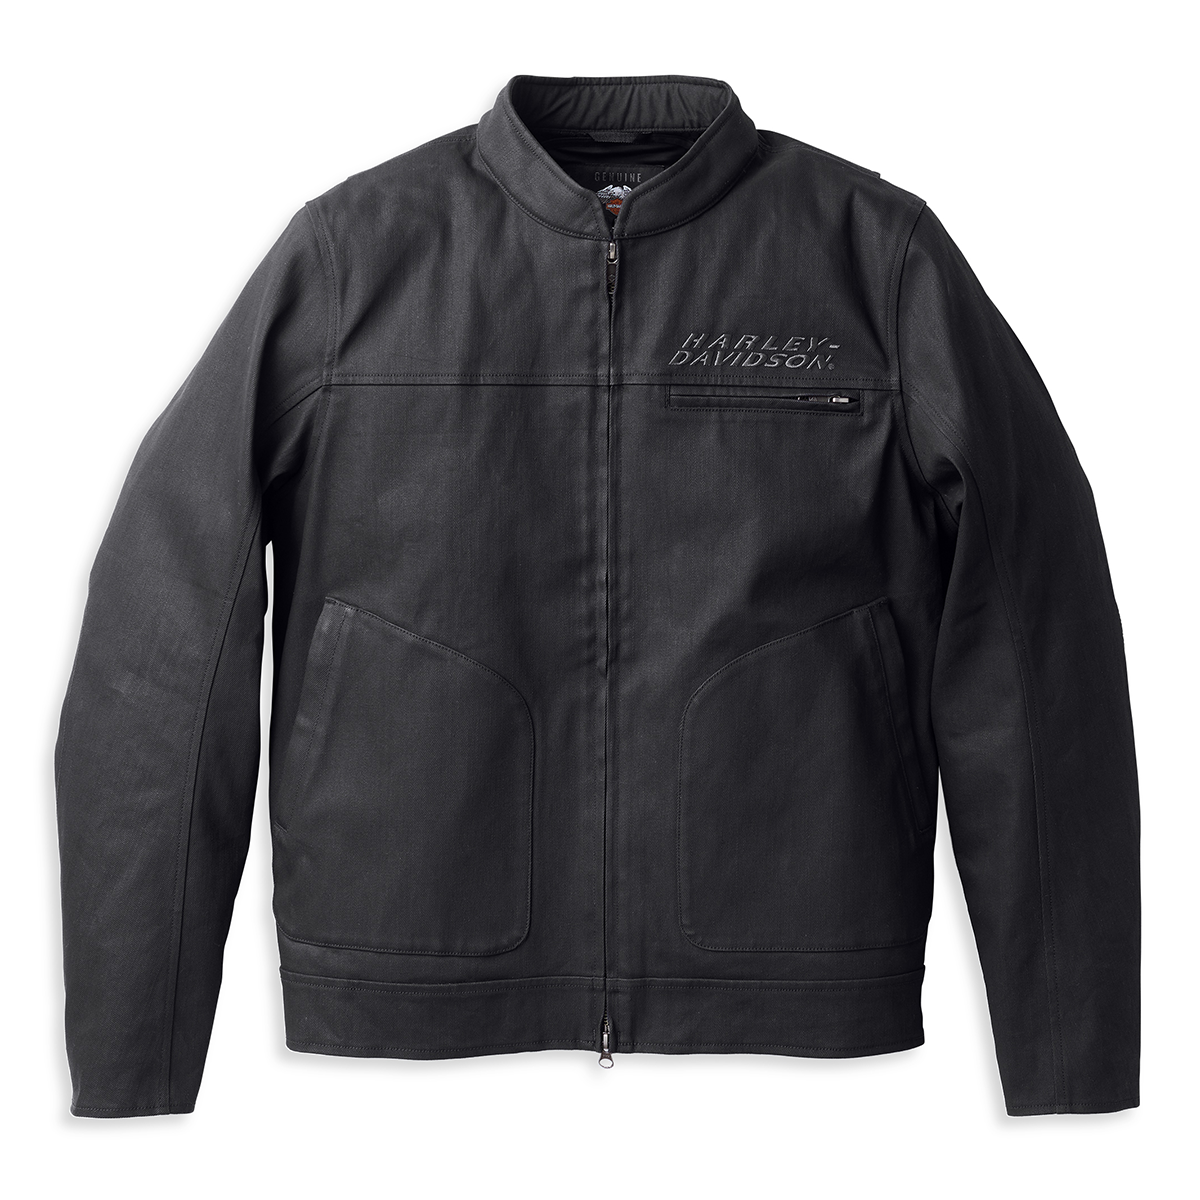 Harley-Davidson Metropolitan Mandarin Collar 3-in-1 Men's Jacket